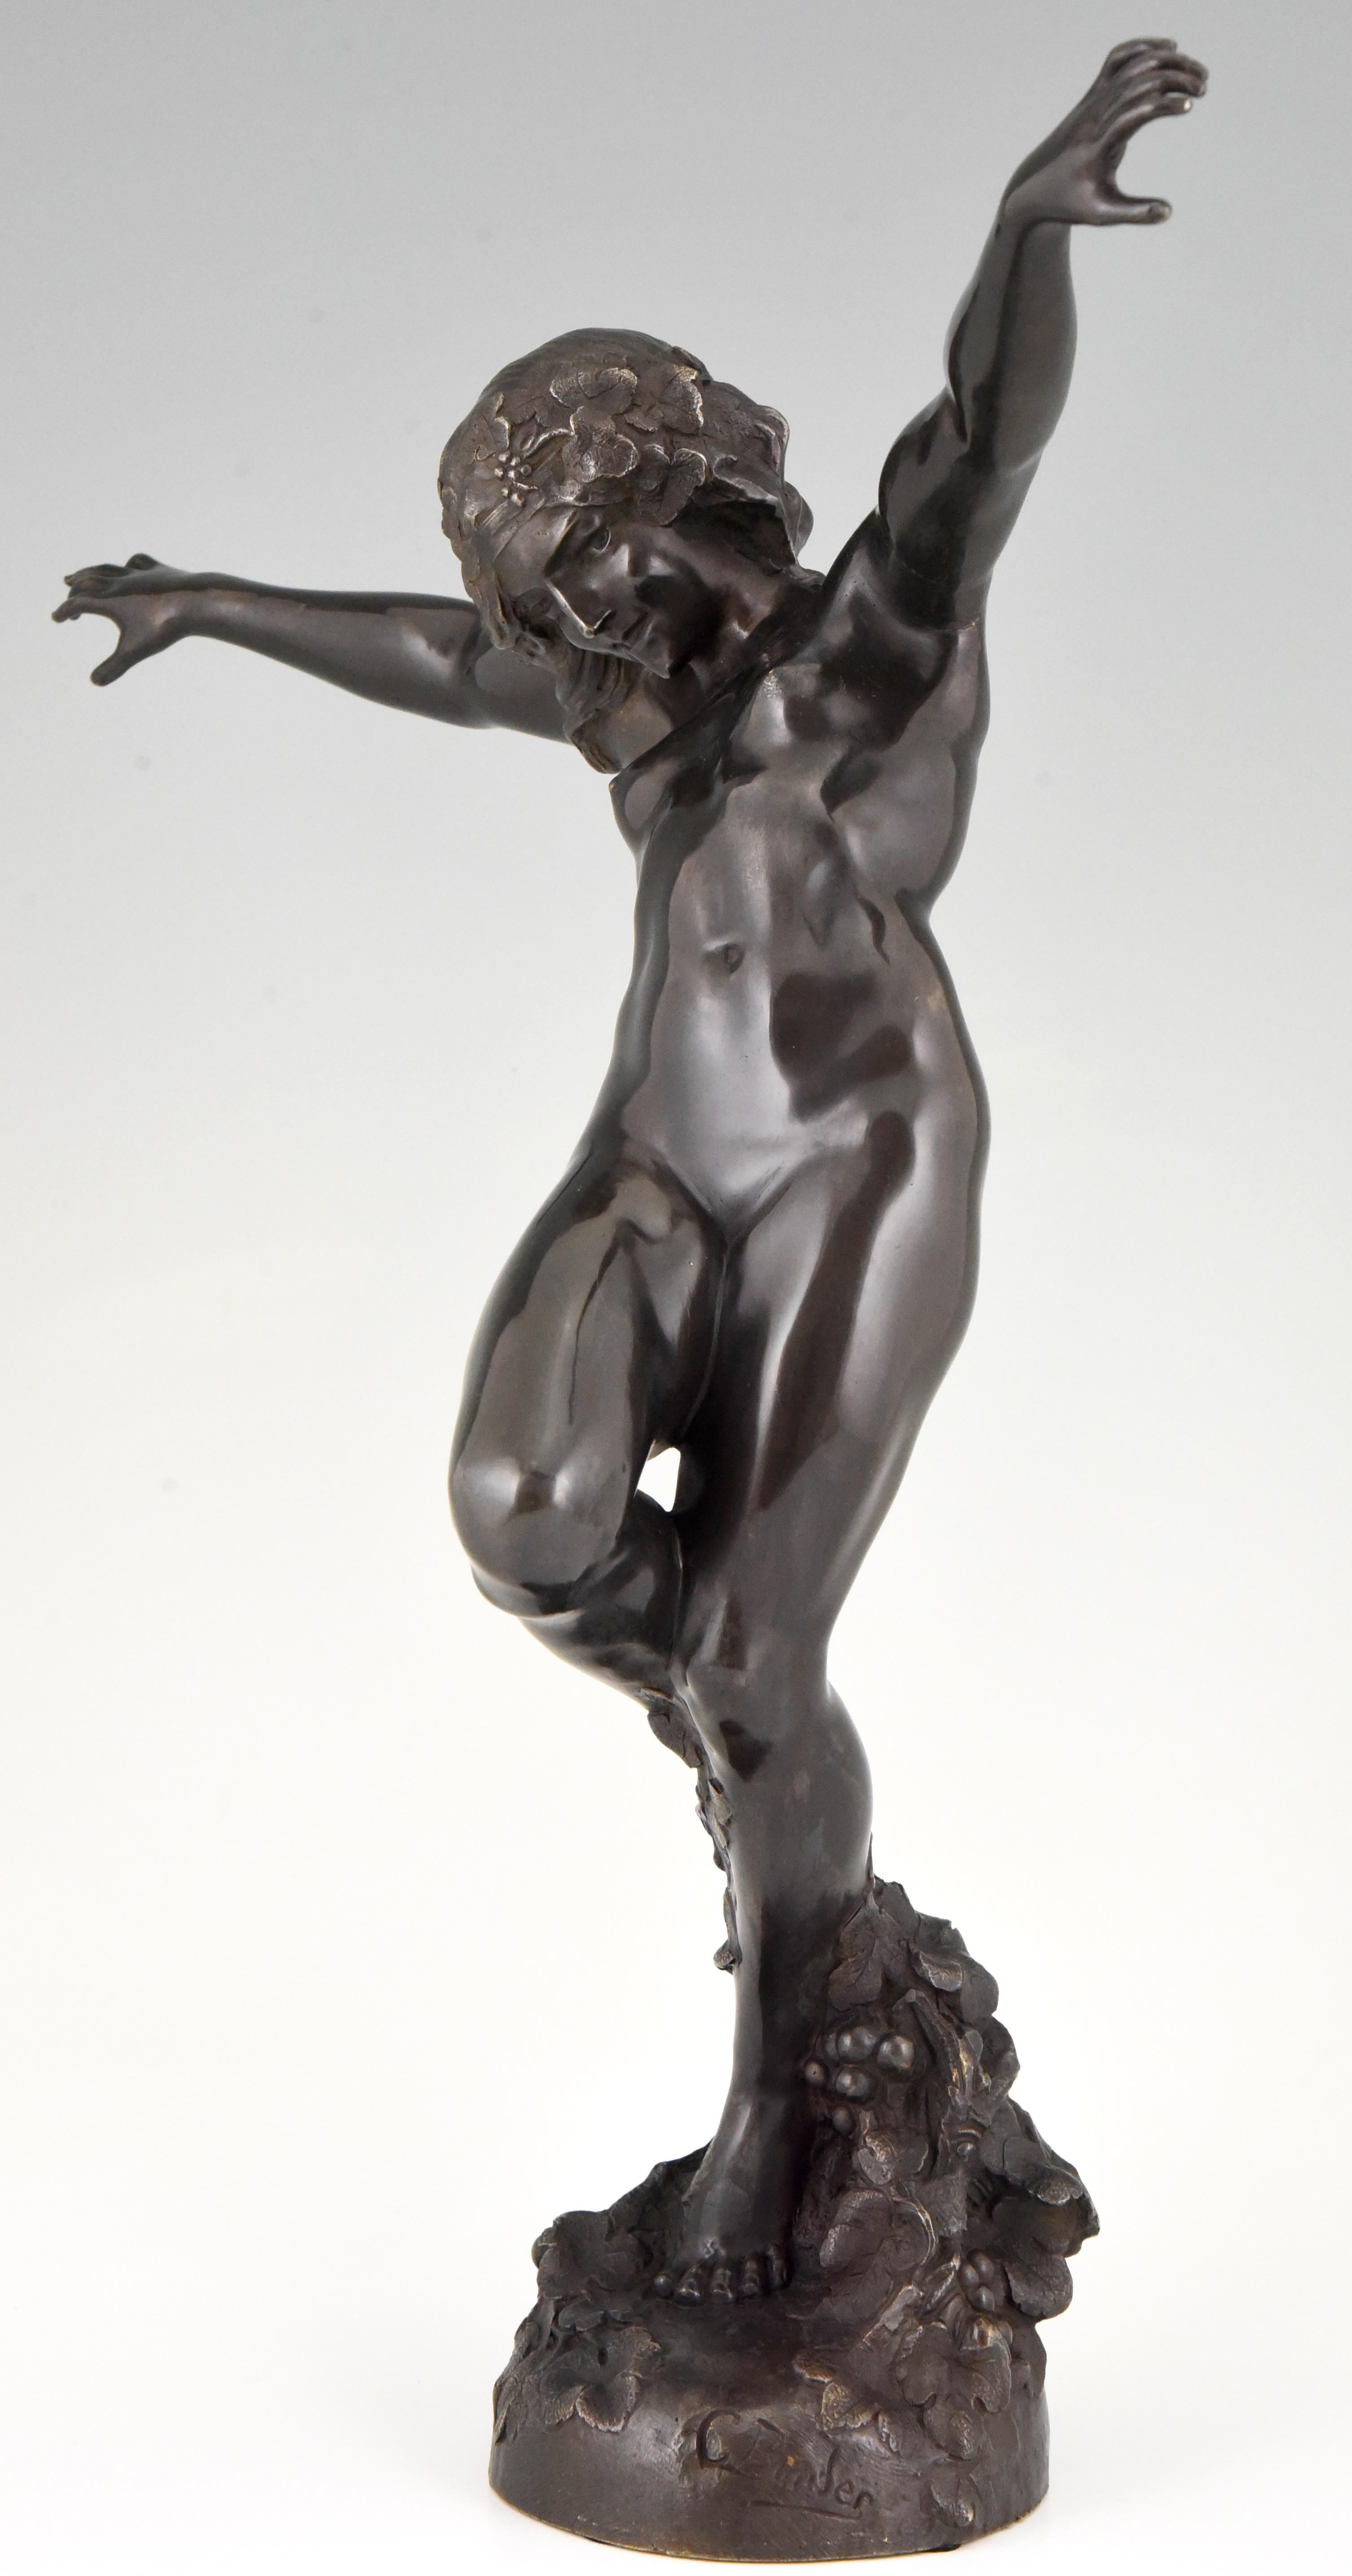 French Art Nouveau Bronze Sculpture Dancing Nude Bacchante Carl Binder, France, 1905